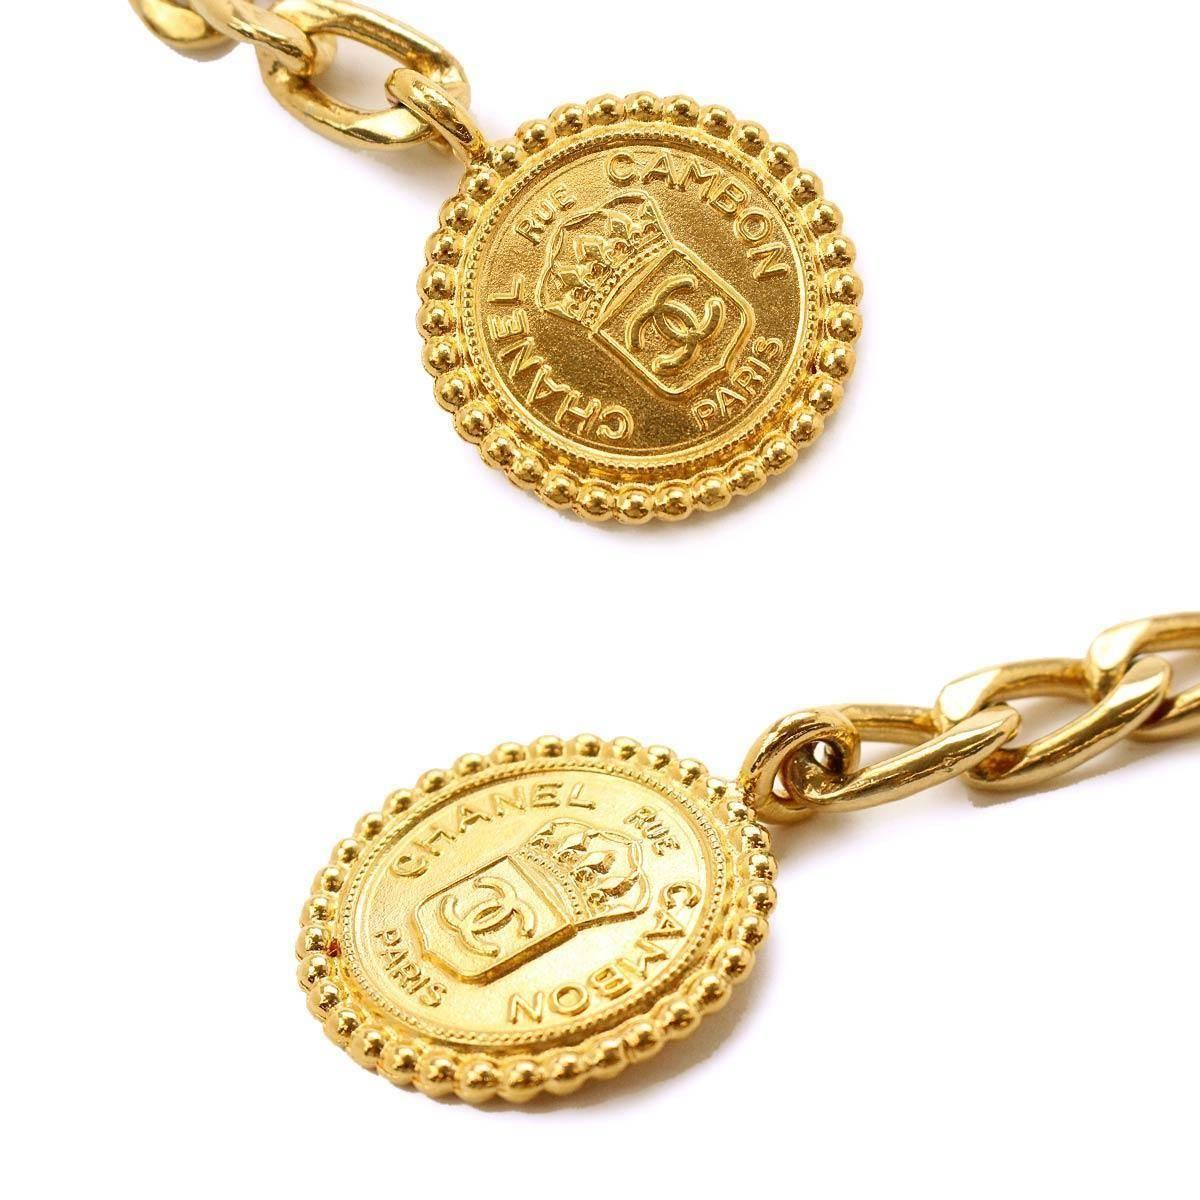 CURATOR'S NOTES

Metal
Gold tone
Hook closure
Medallion diameter 1